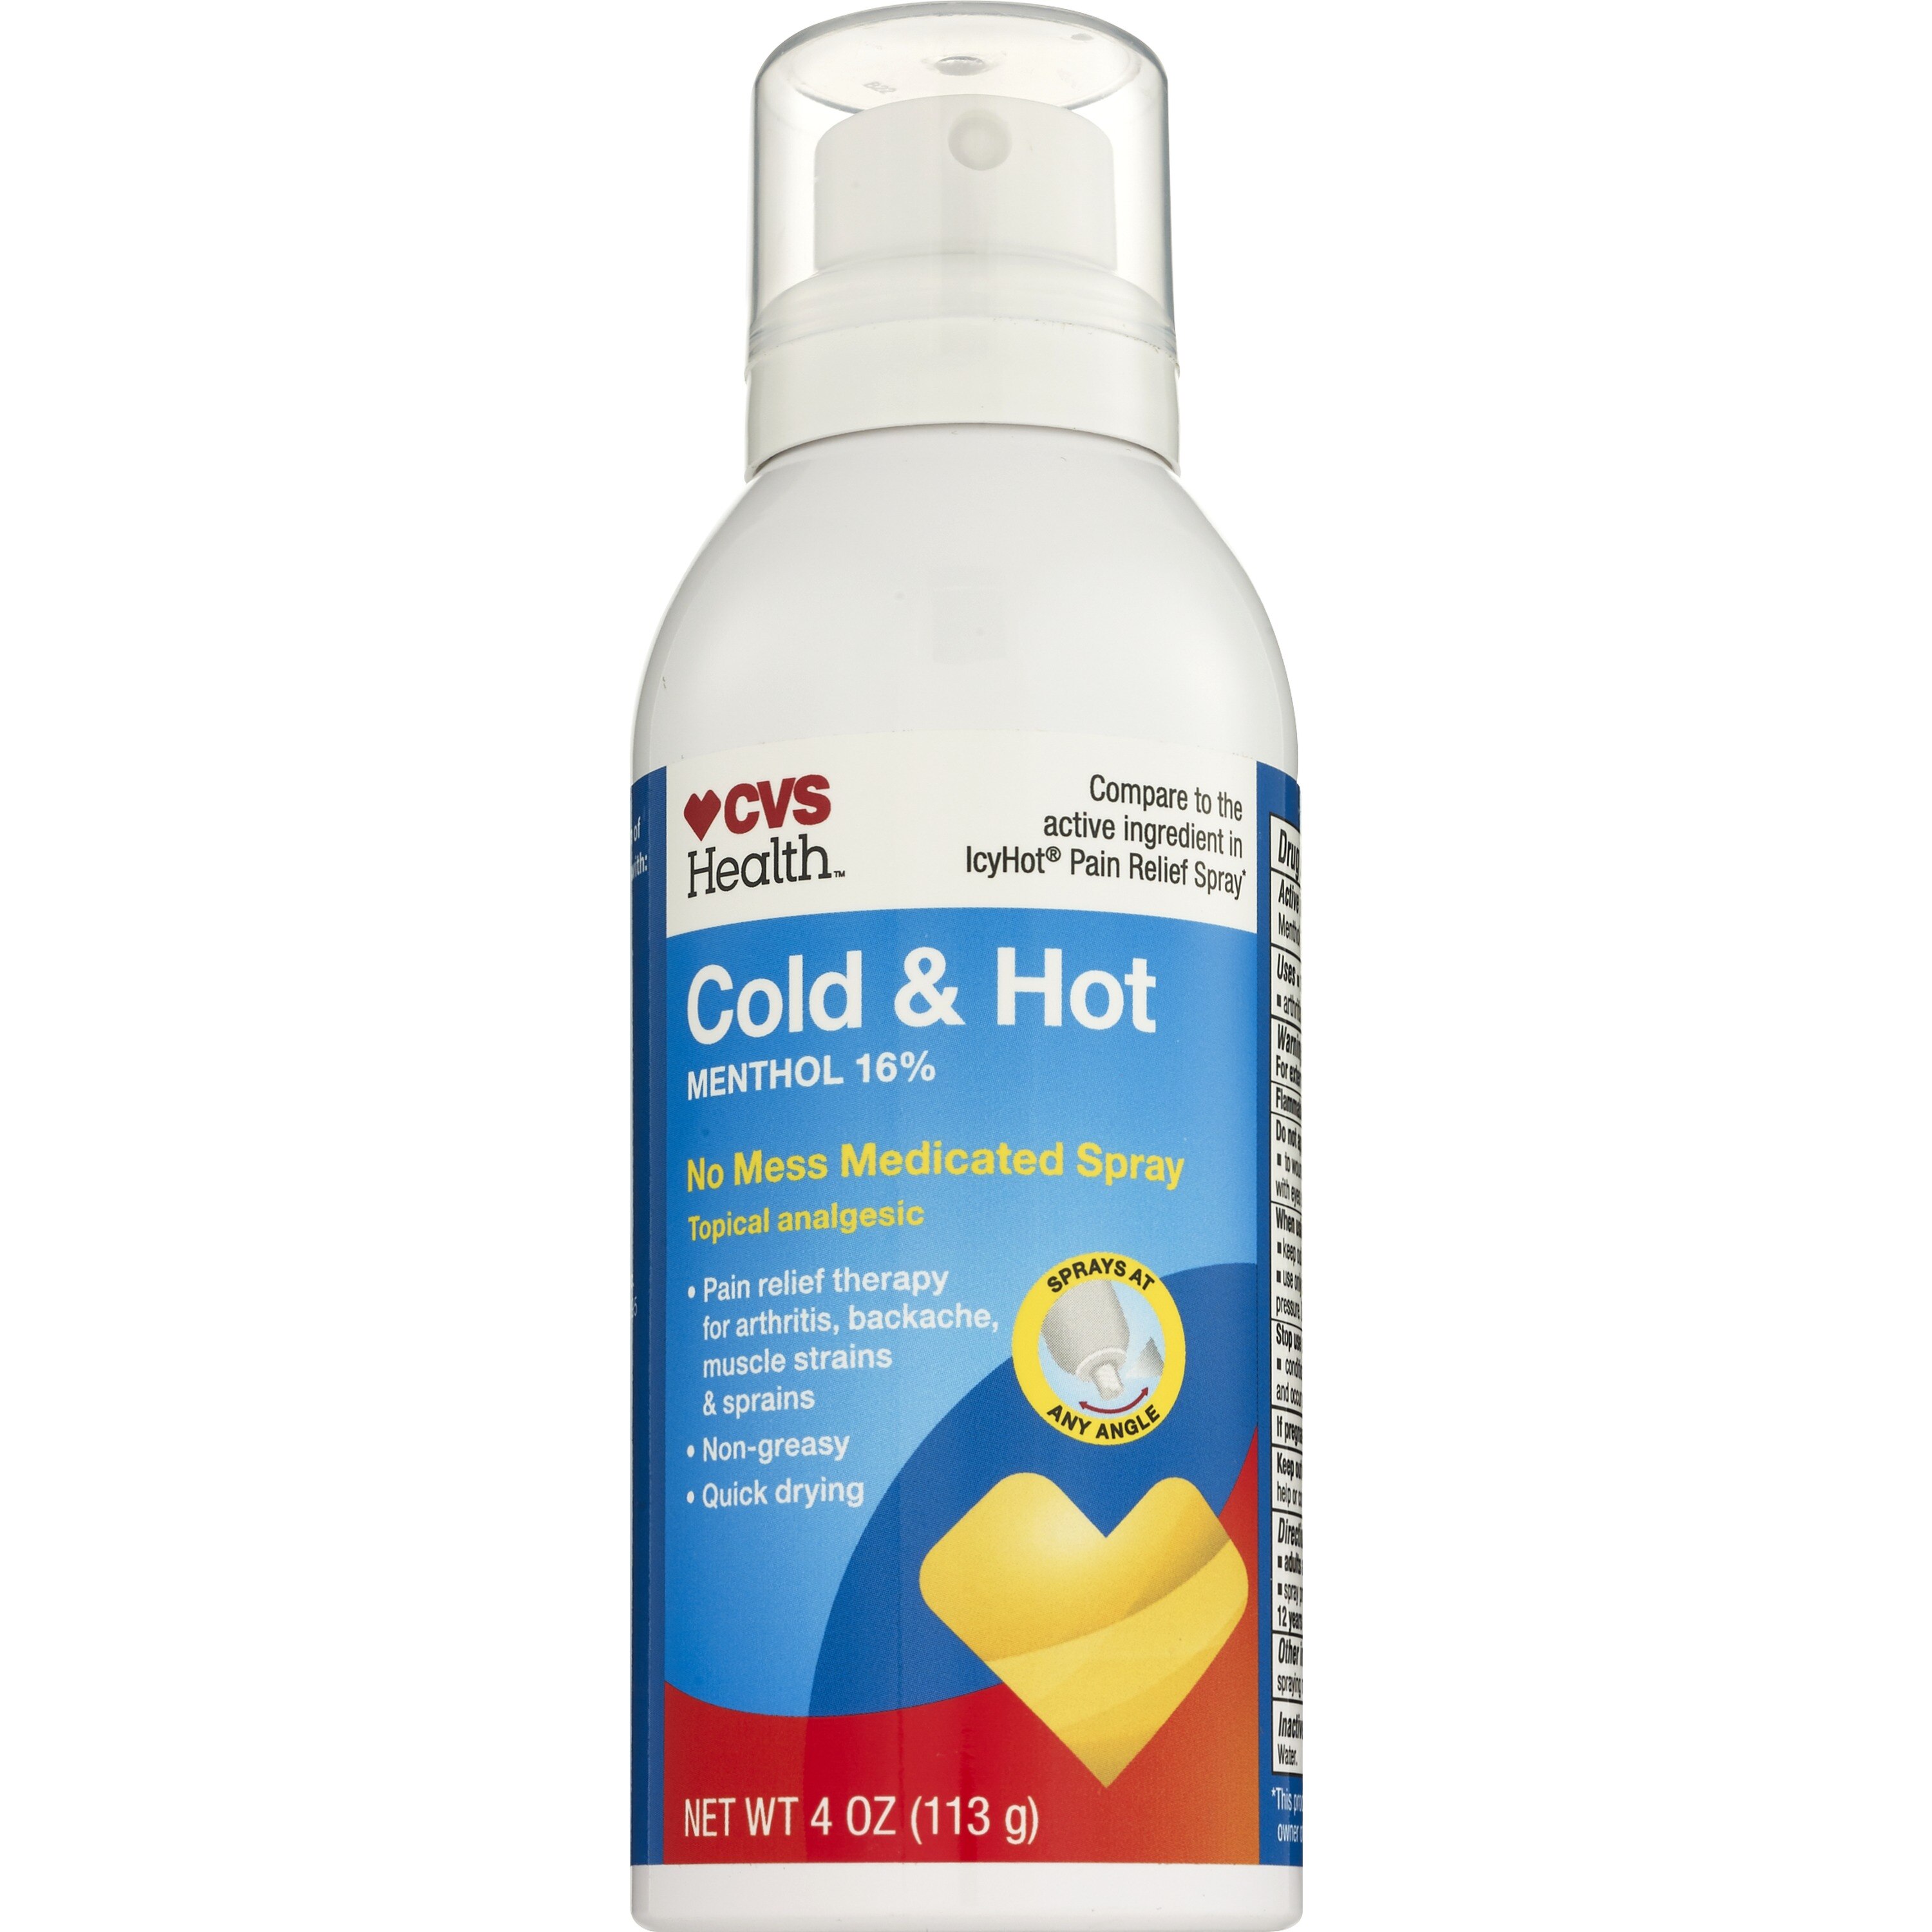 CVS Health Cold & Hot Pain Relief No Mess Medicated Spray, Menthol 16%, 4 OZ